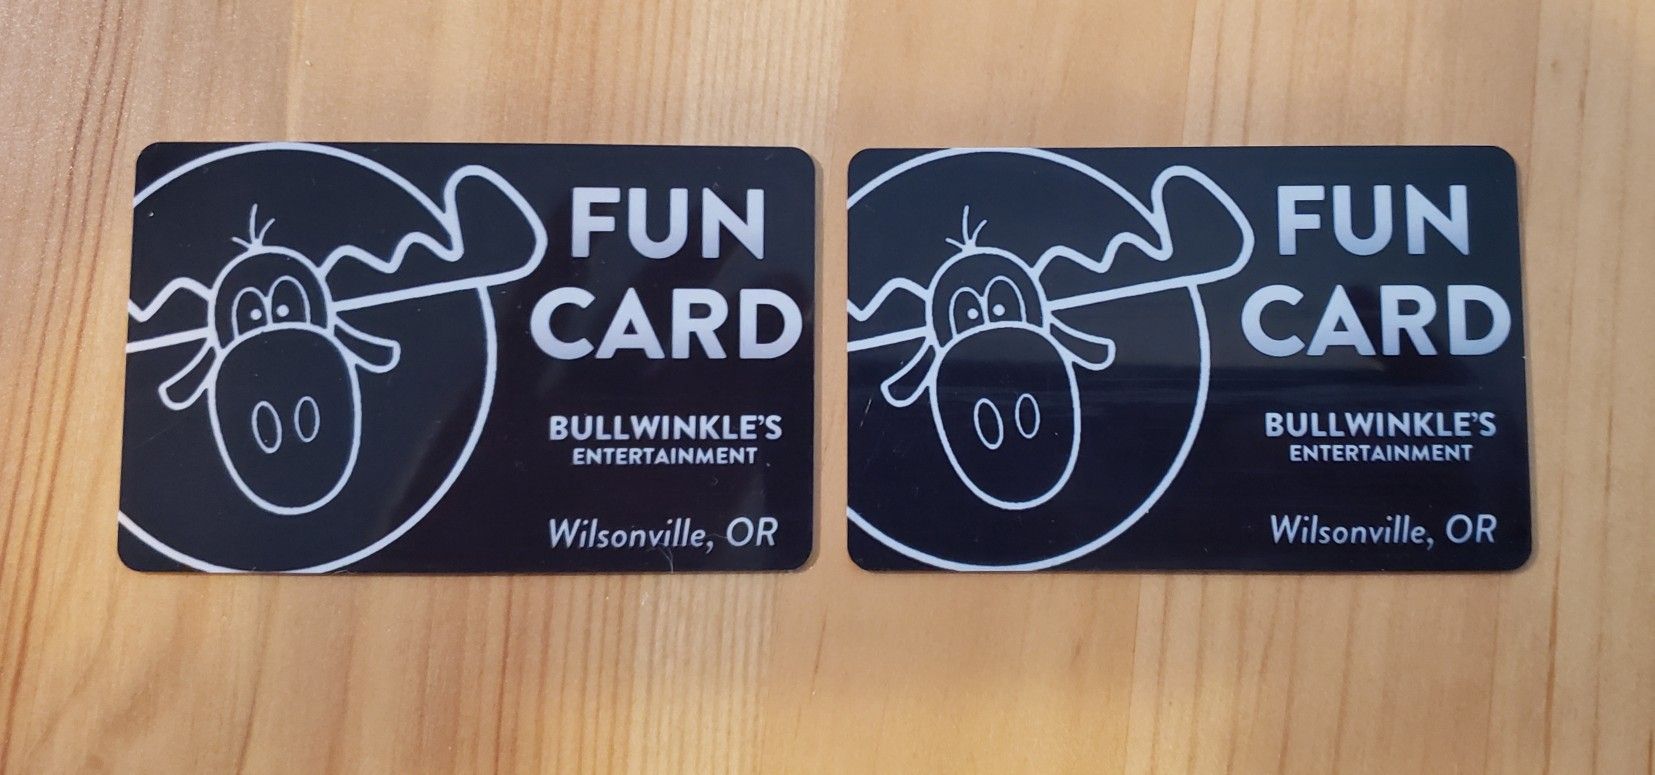 Bullwinkle Fun Cards